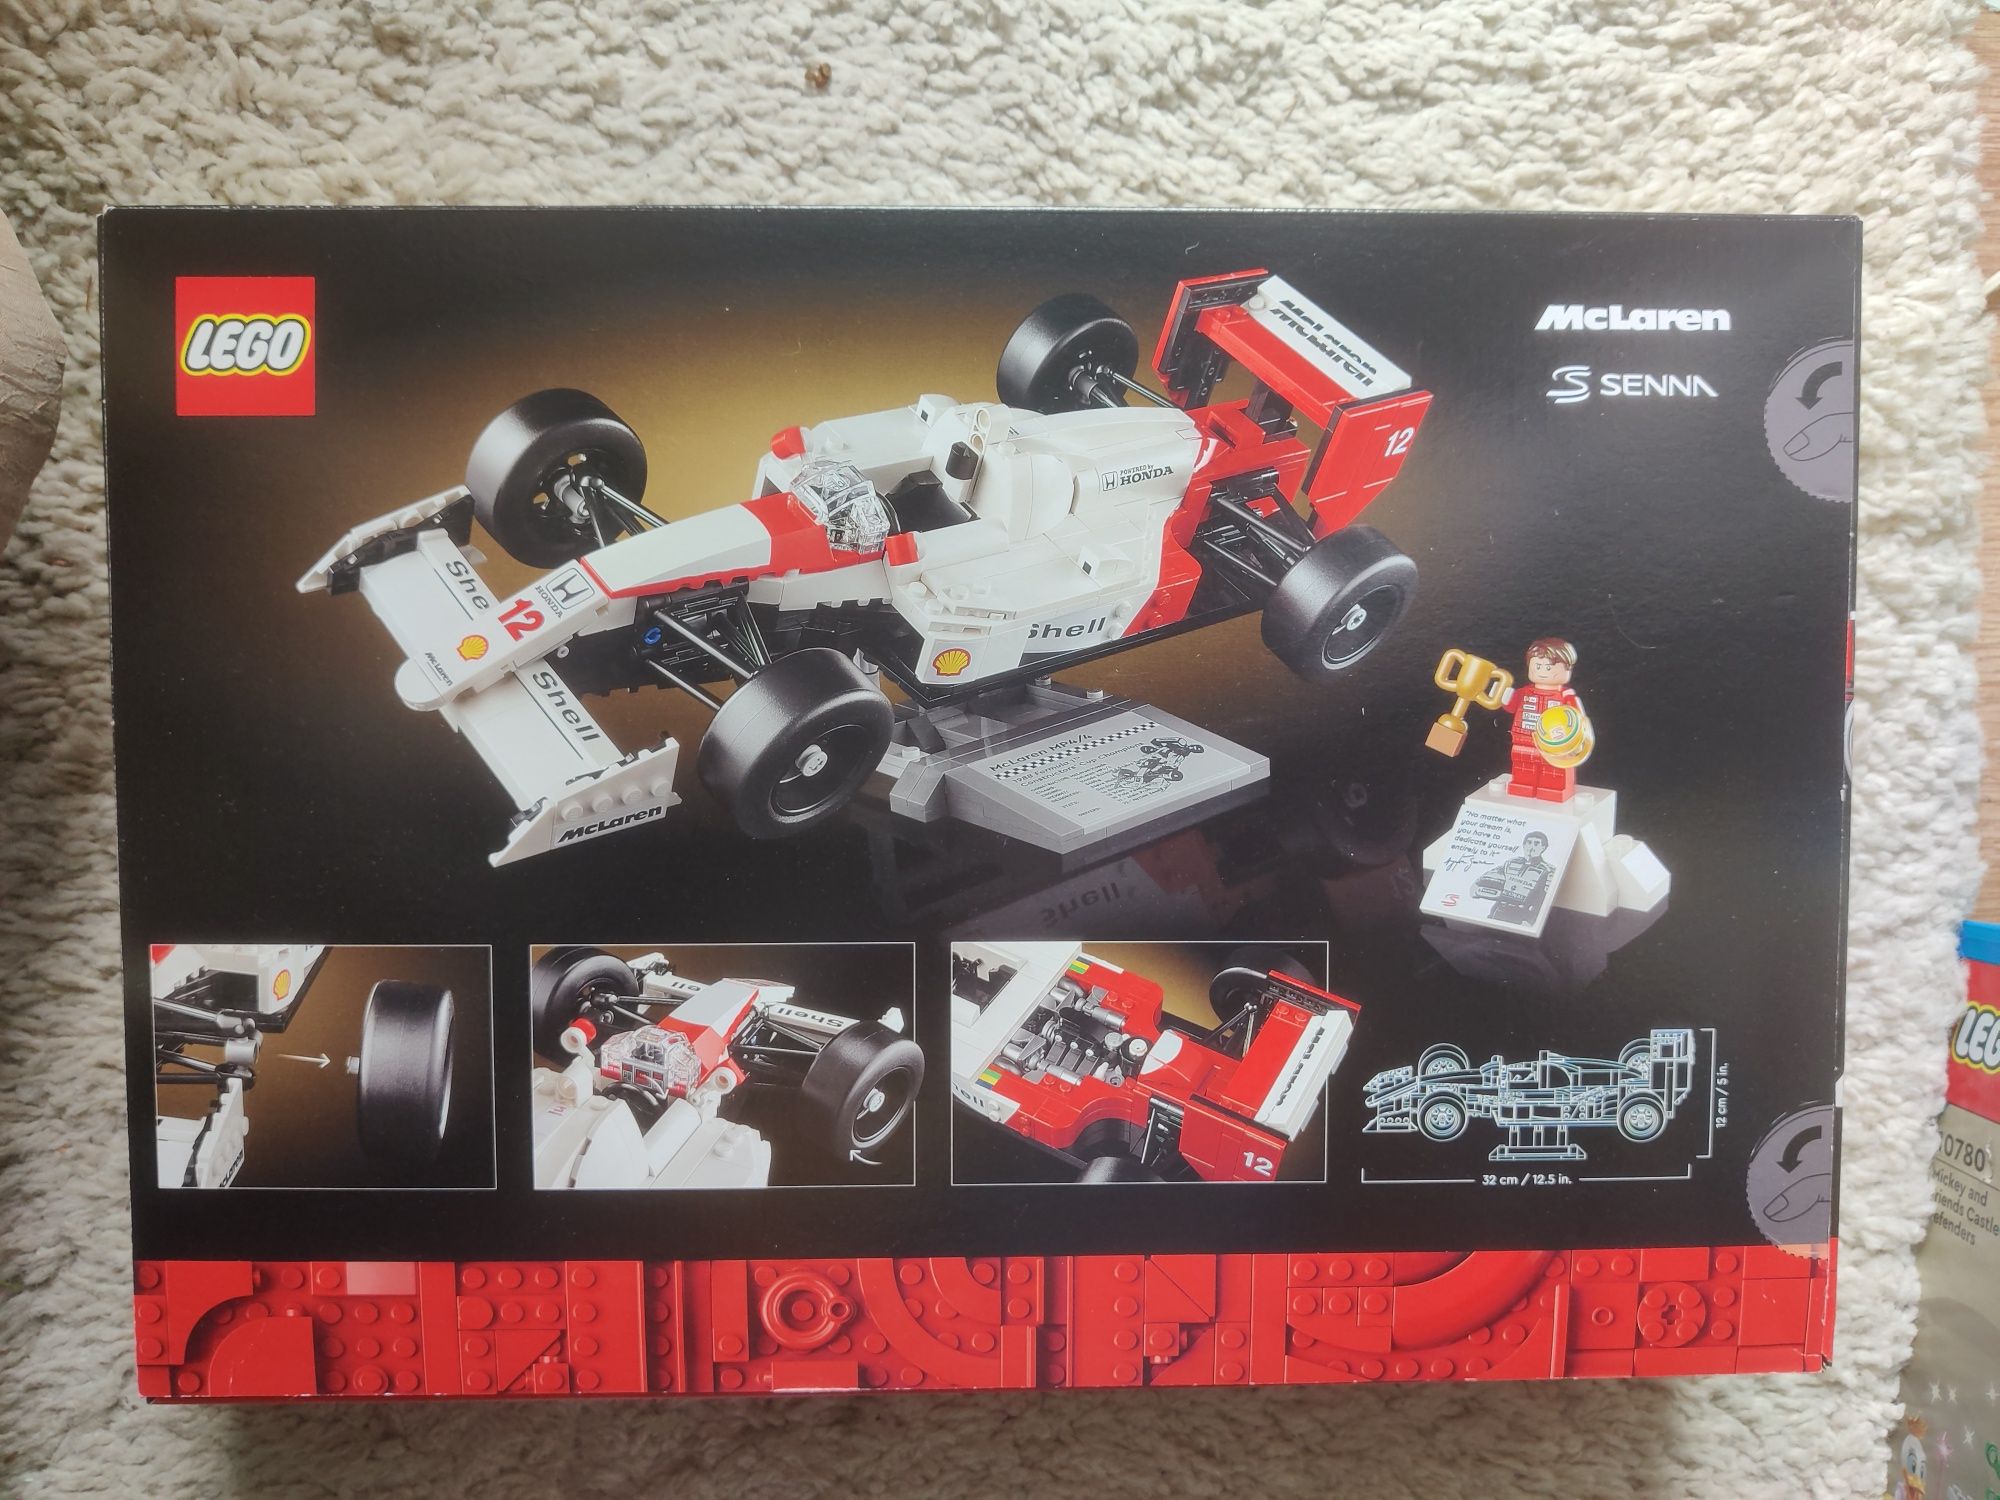 Lego Icons 10330 McLaren MP4/4 i Ayrton Senna